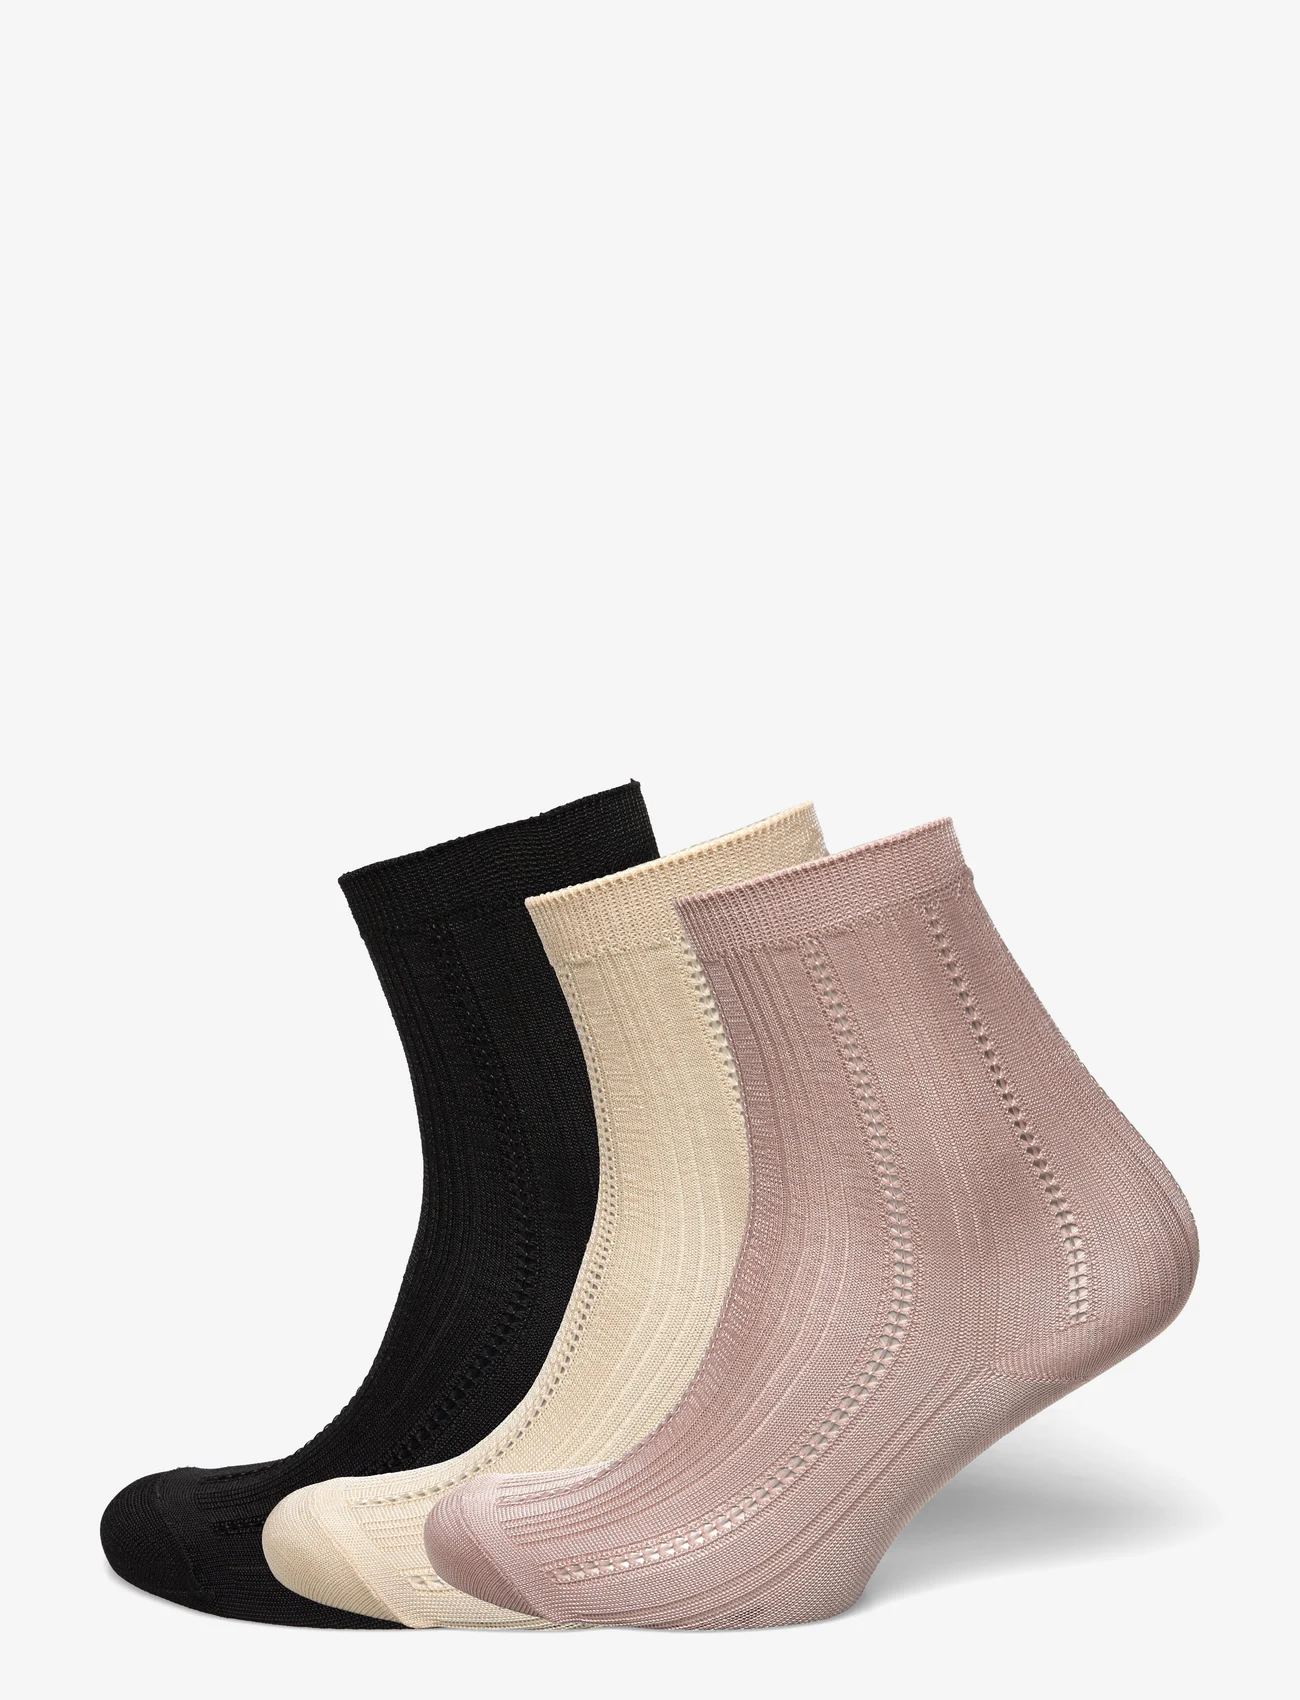 Becksöndergaard - Solid Drake Sock 3 Pack - lowest prices - black/sand/fawn - 0